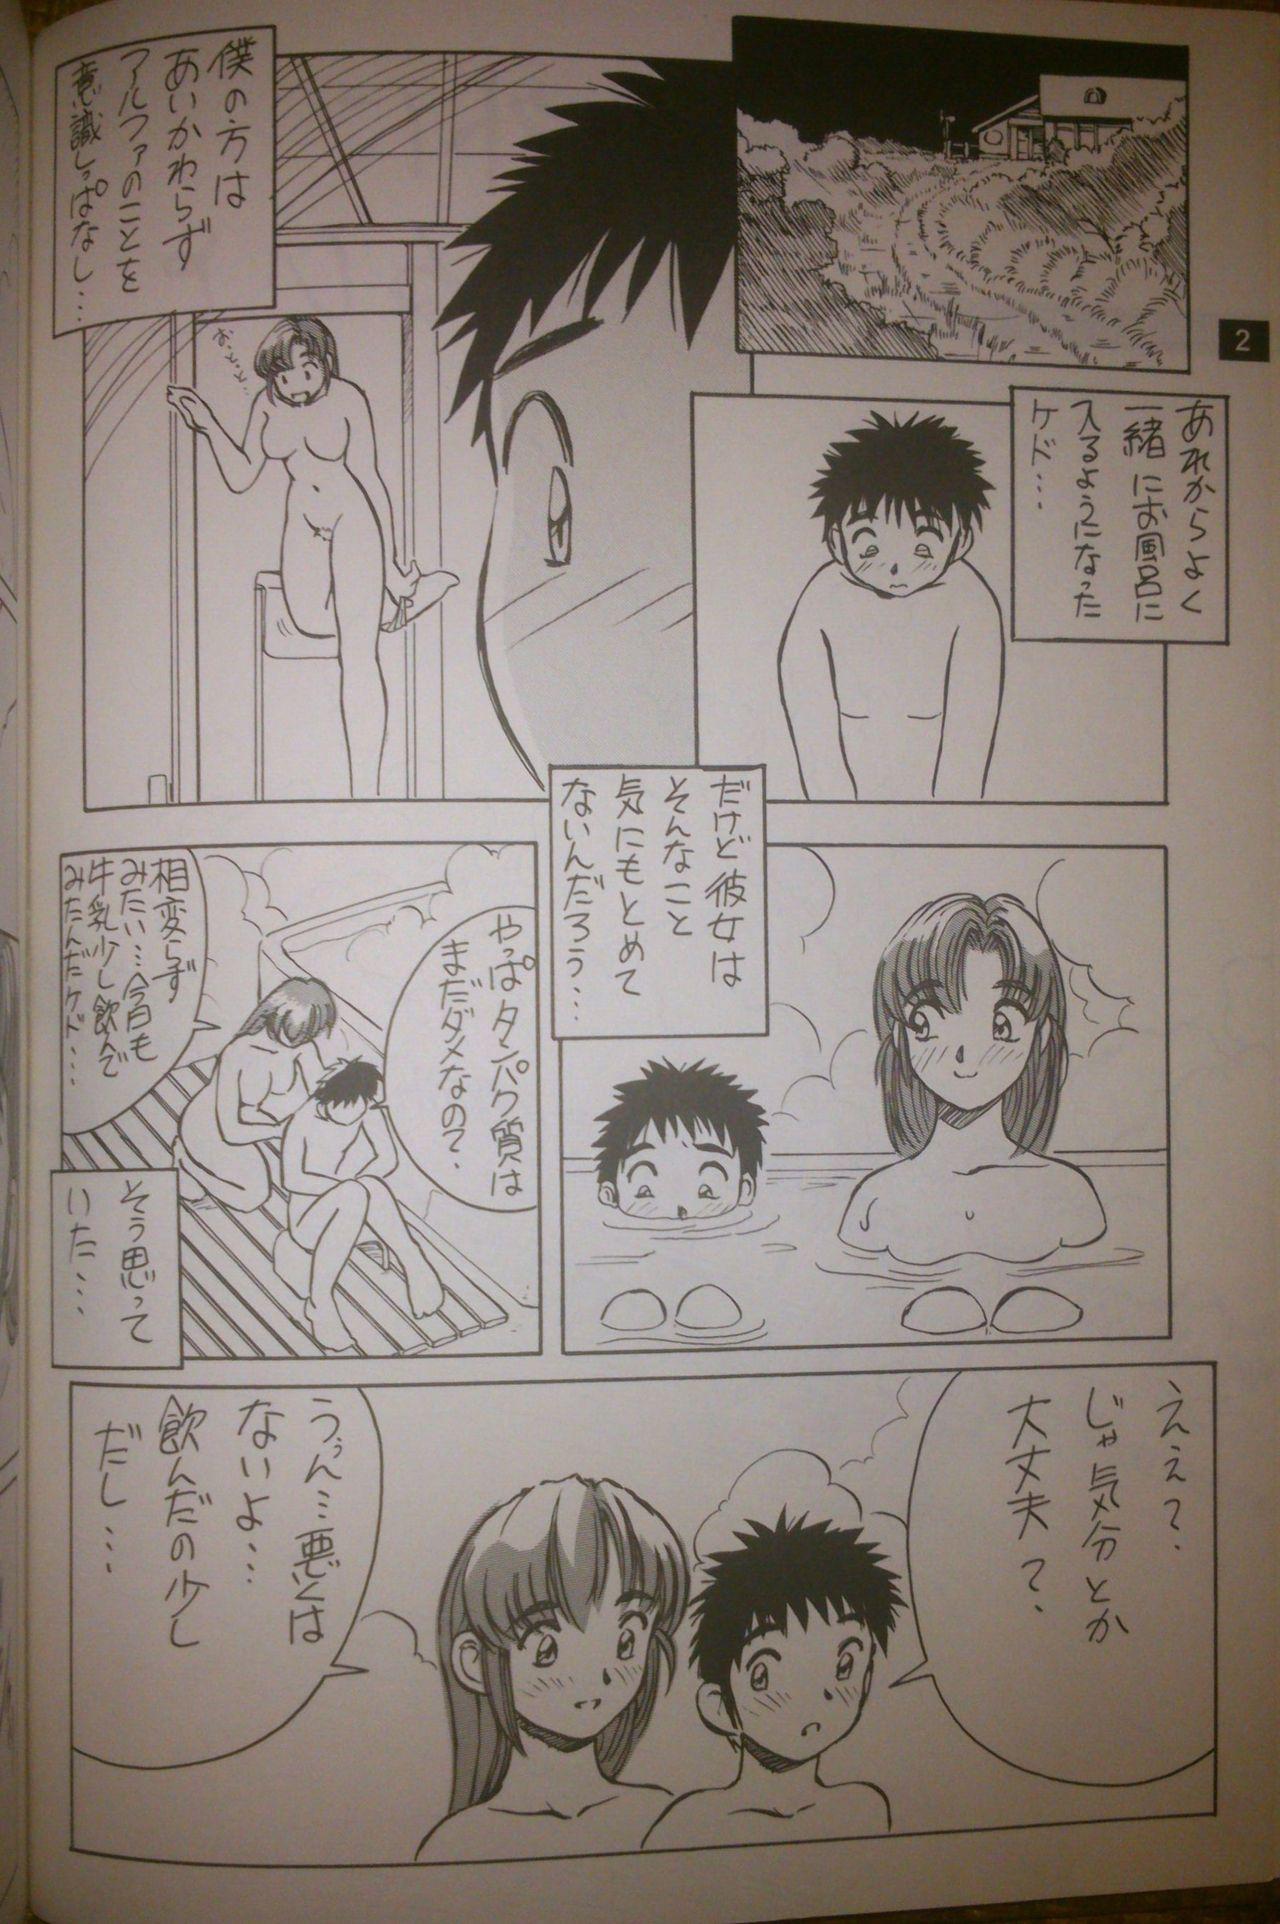 Camgirls Artifitial Humanity Tankyuusha Vol. 2 - Yokohama kaidashi kikou Girl - Page 3